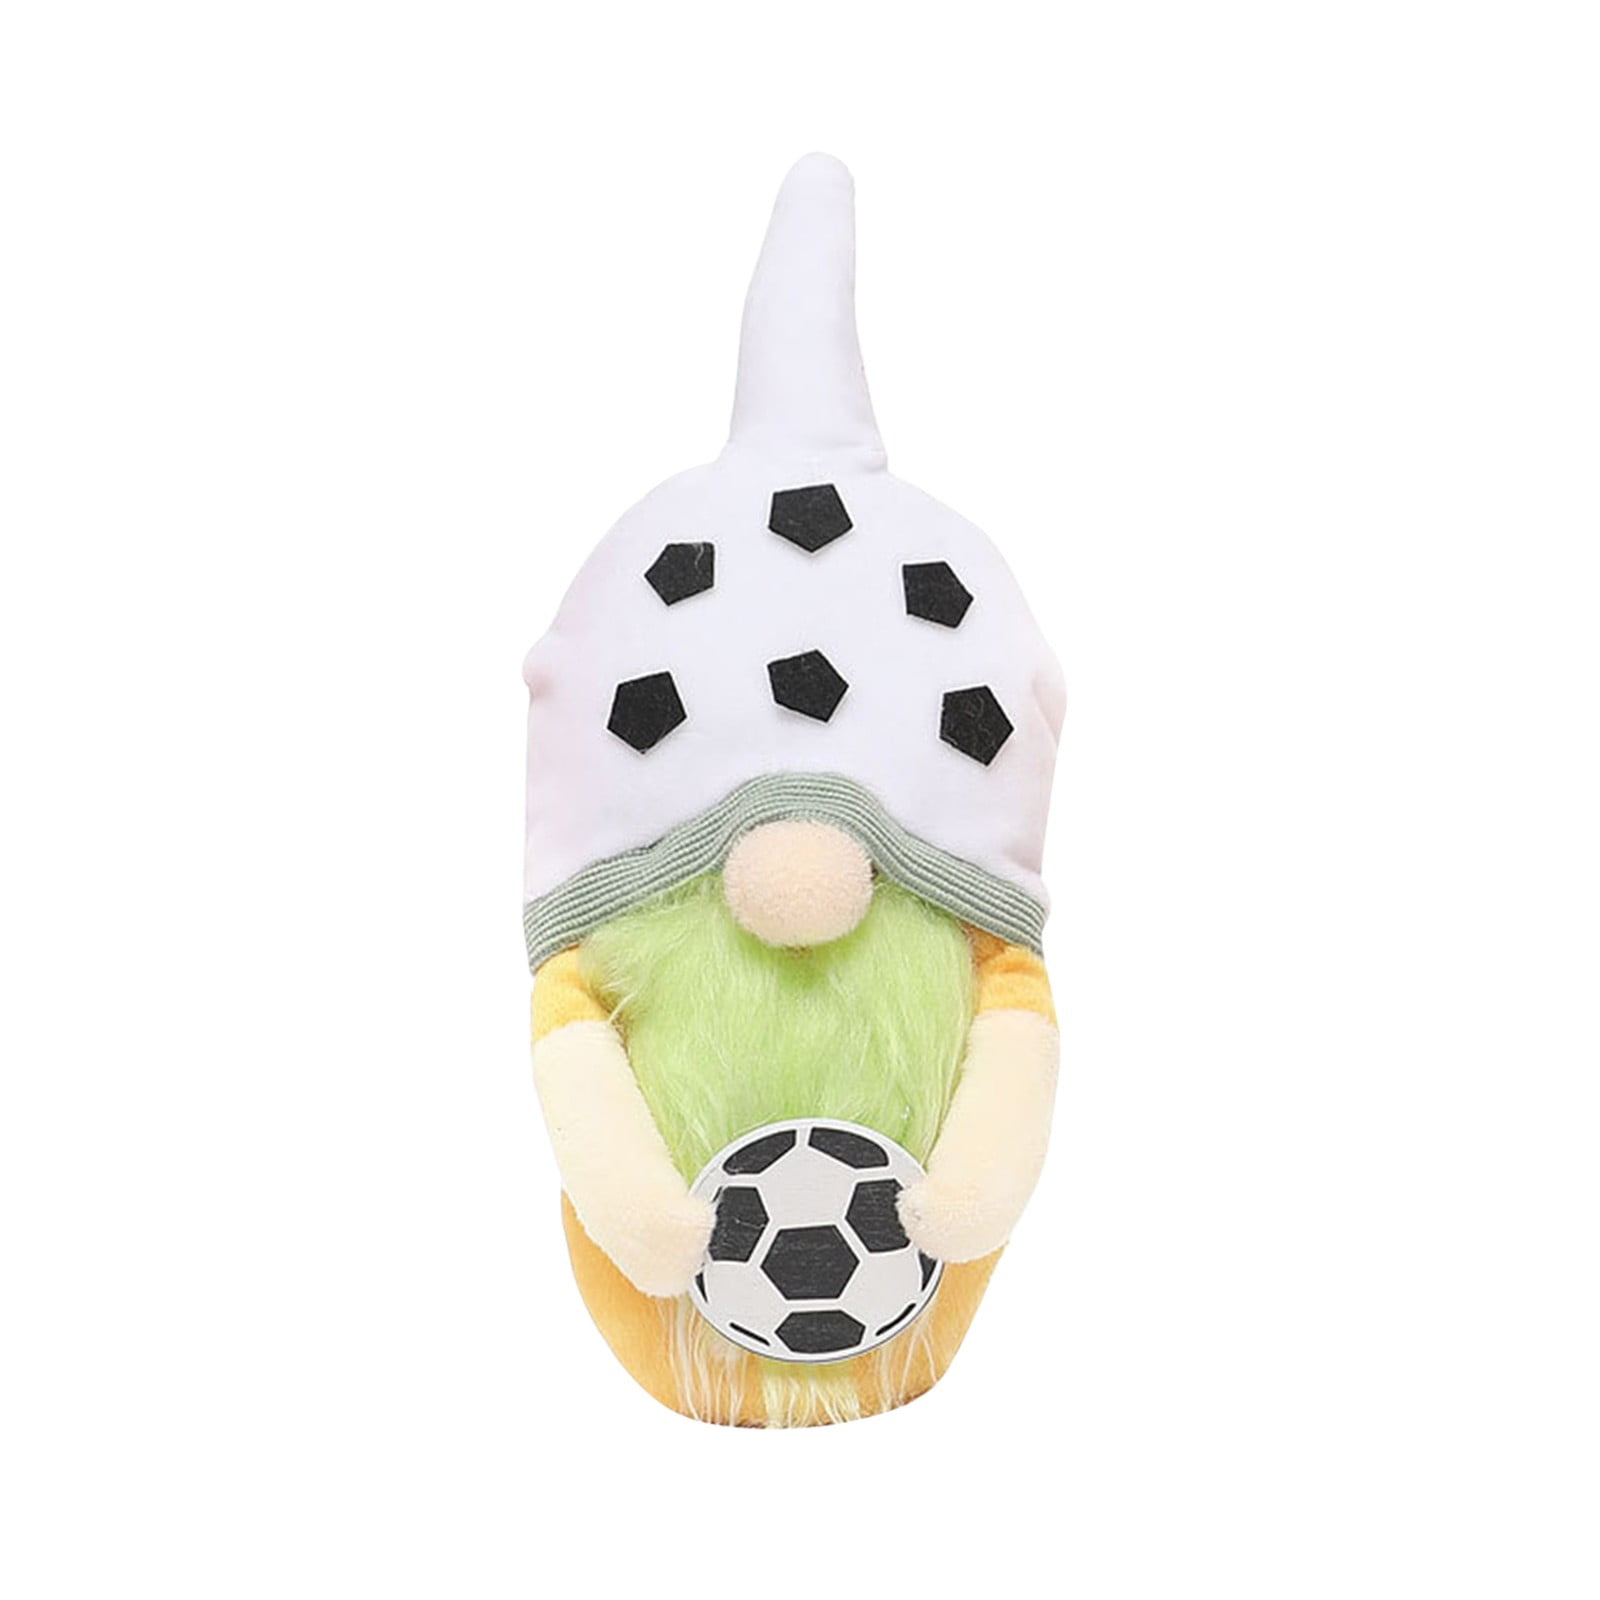 Abominable Monster Snowman Everest Figure Toy Soft Stuffed Doll Gift for  Kids yeti jouet en peluche. -  France